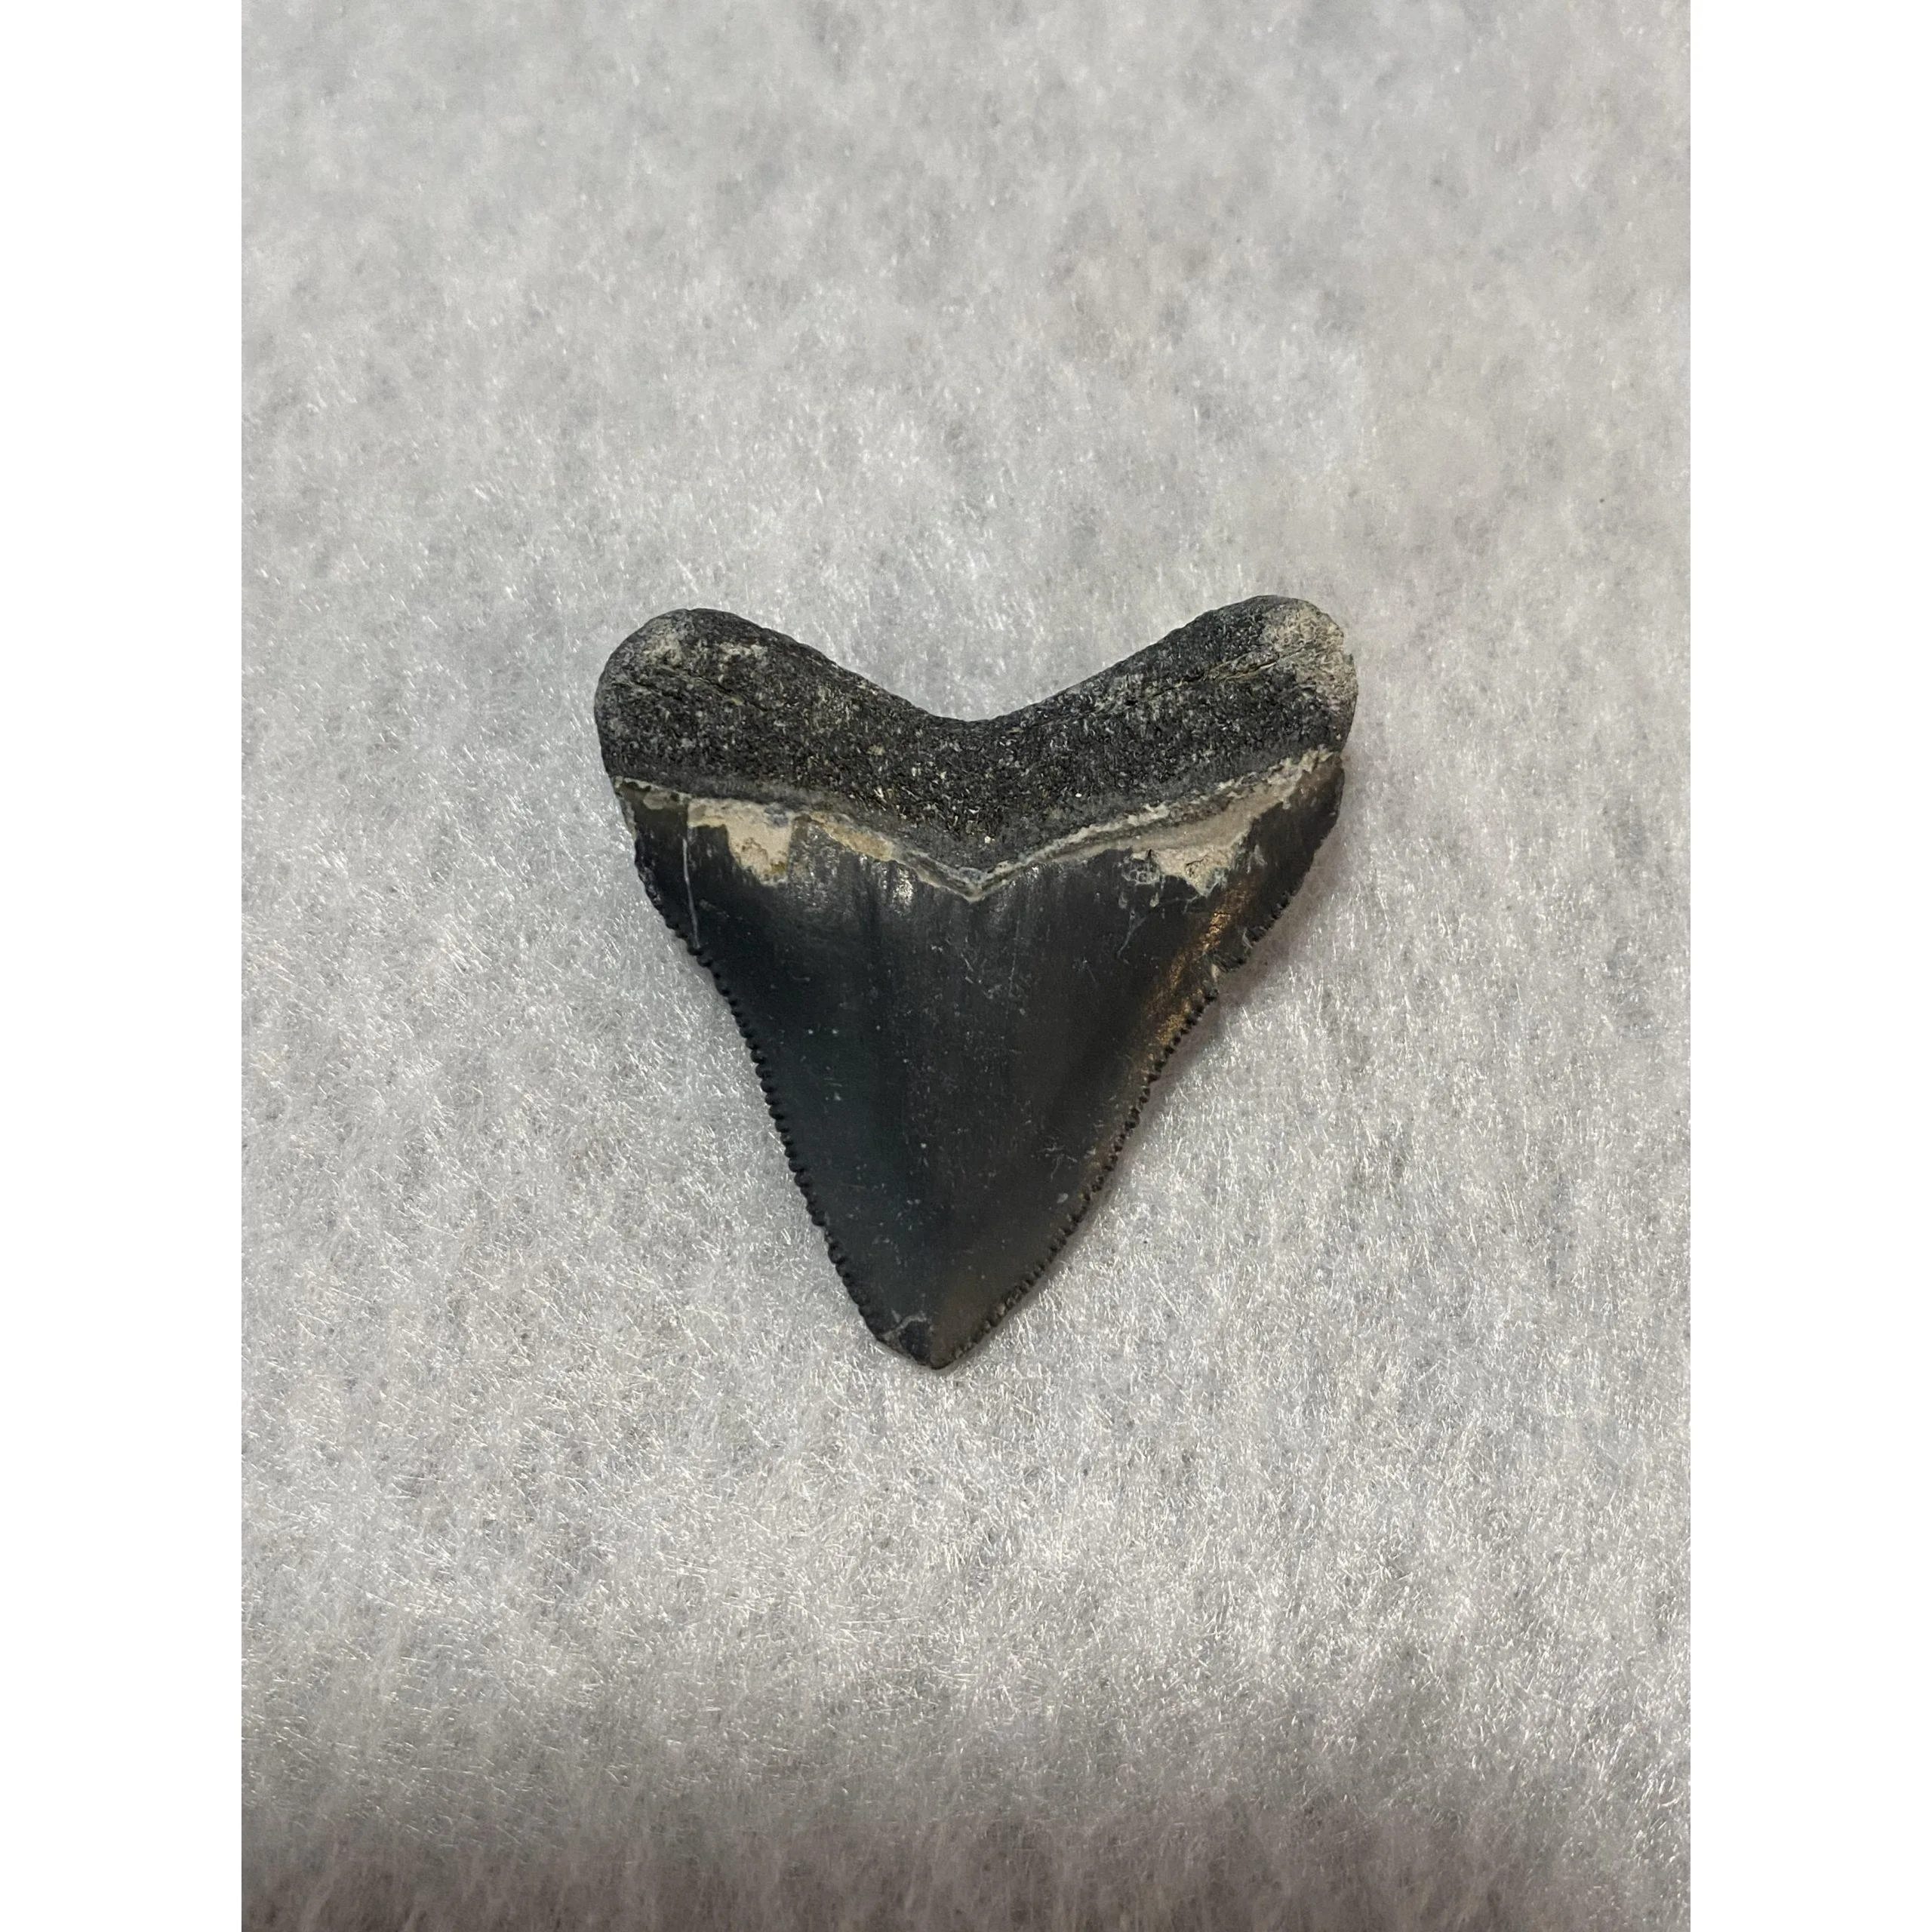 Megalodon Tooth  Bone Valley, Florida 1.77 inch Prehistoric Online